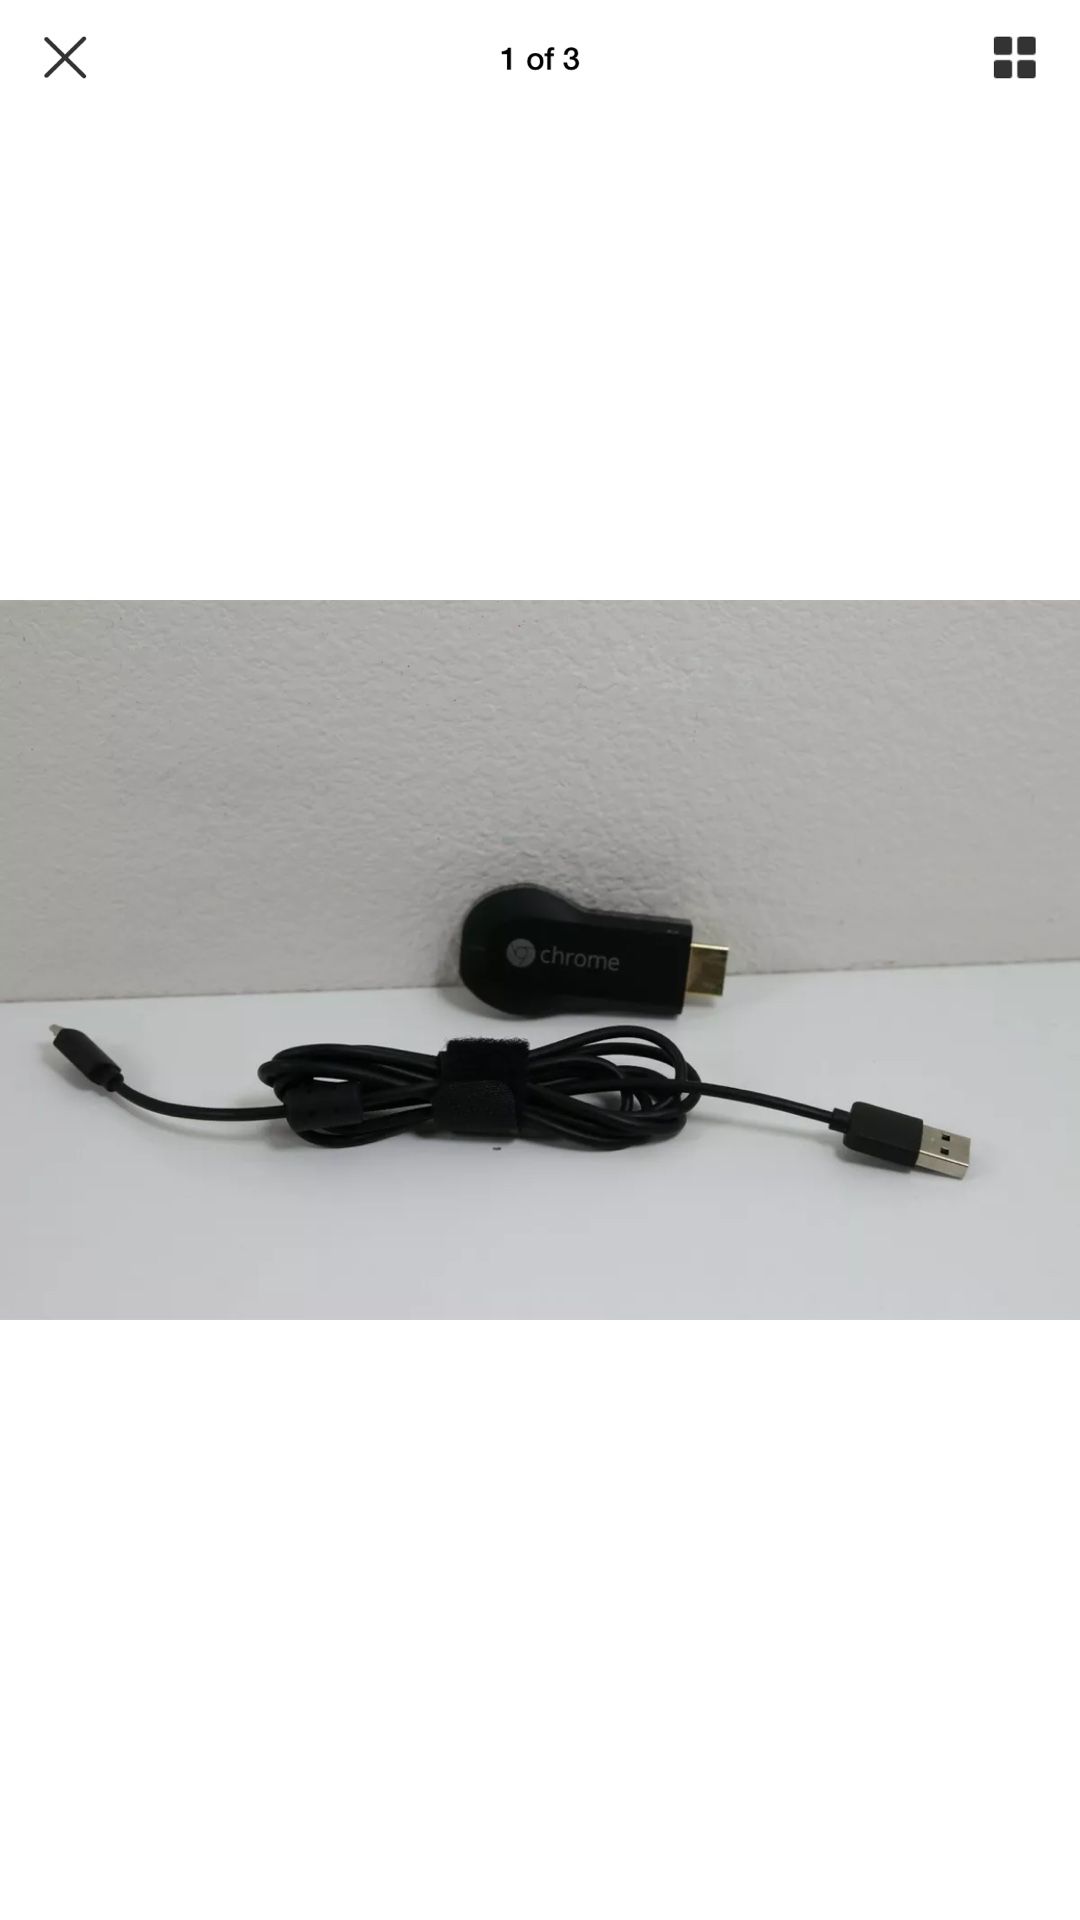 Google Chromecast (1st Generation) HDMI Media Streamer - Black (H2G2-42)